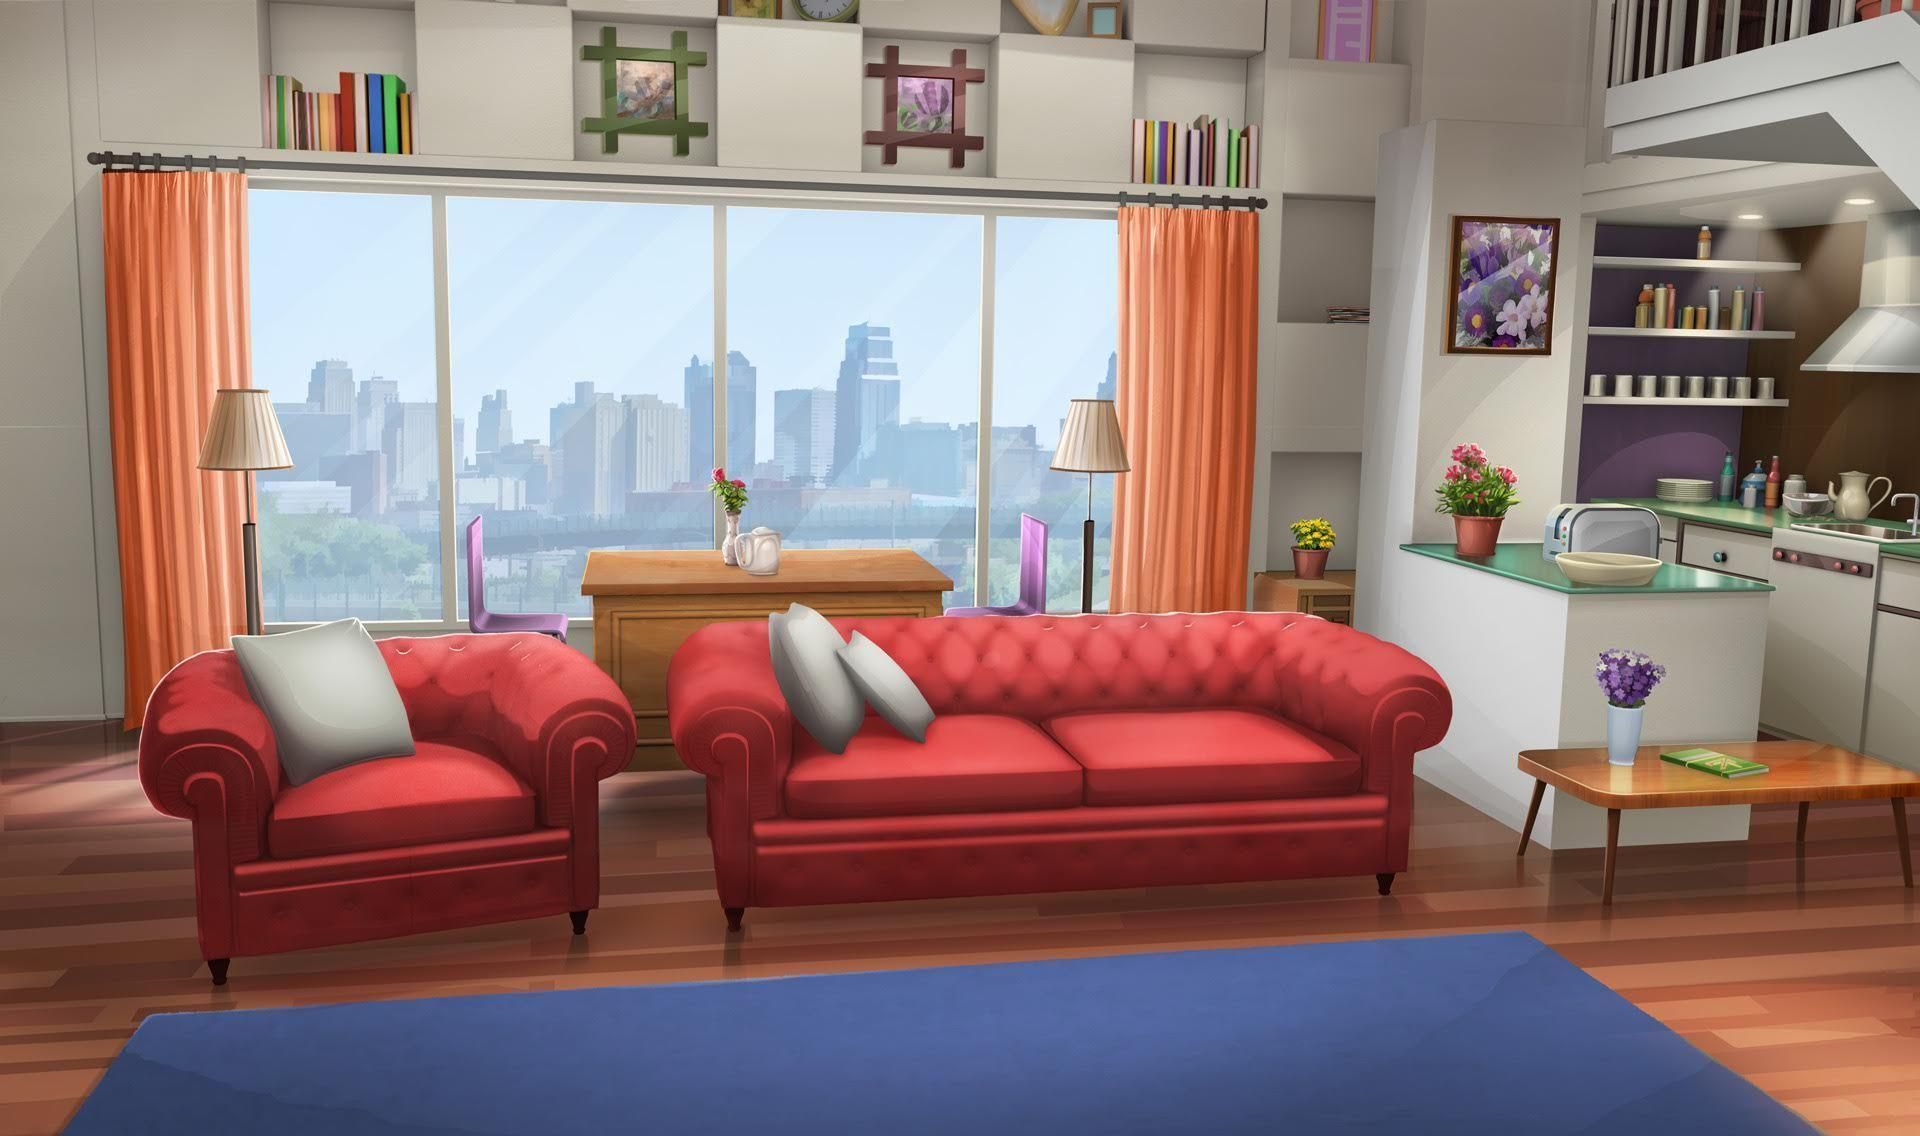 haikyuu 𝐱 𝐘/𝐧 in 2021 Living room background, Anime background